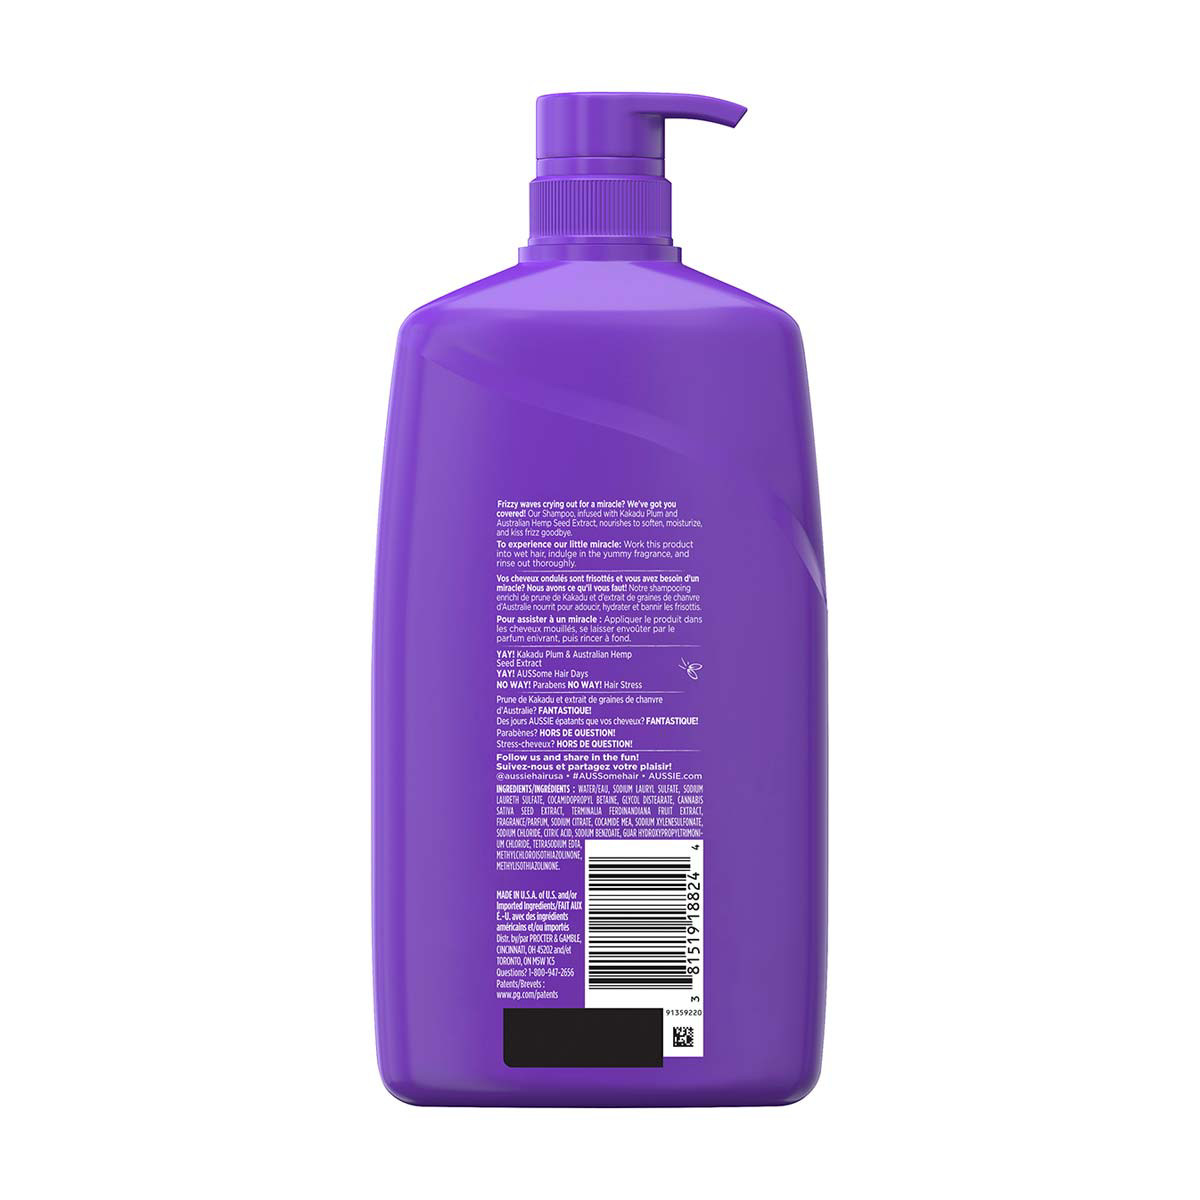 Aussie Miracle Waves Anti-Frizz Hemp Paraben-Free Shampoo, 26.2 fl oz